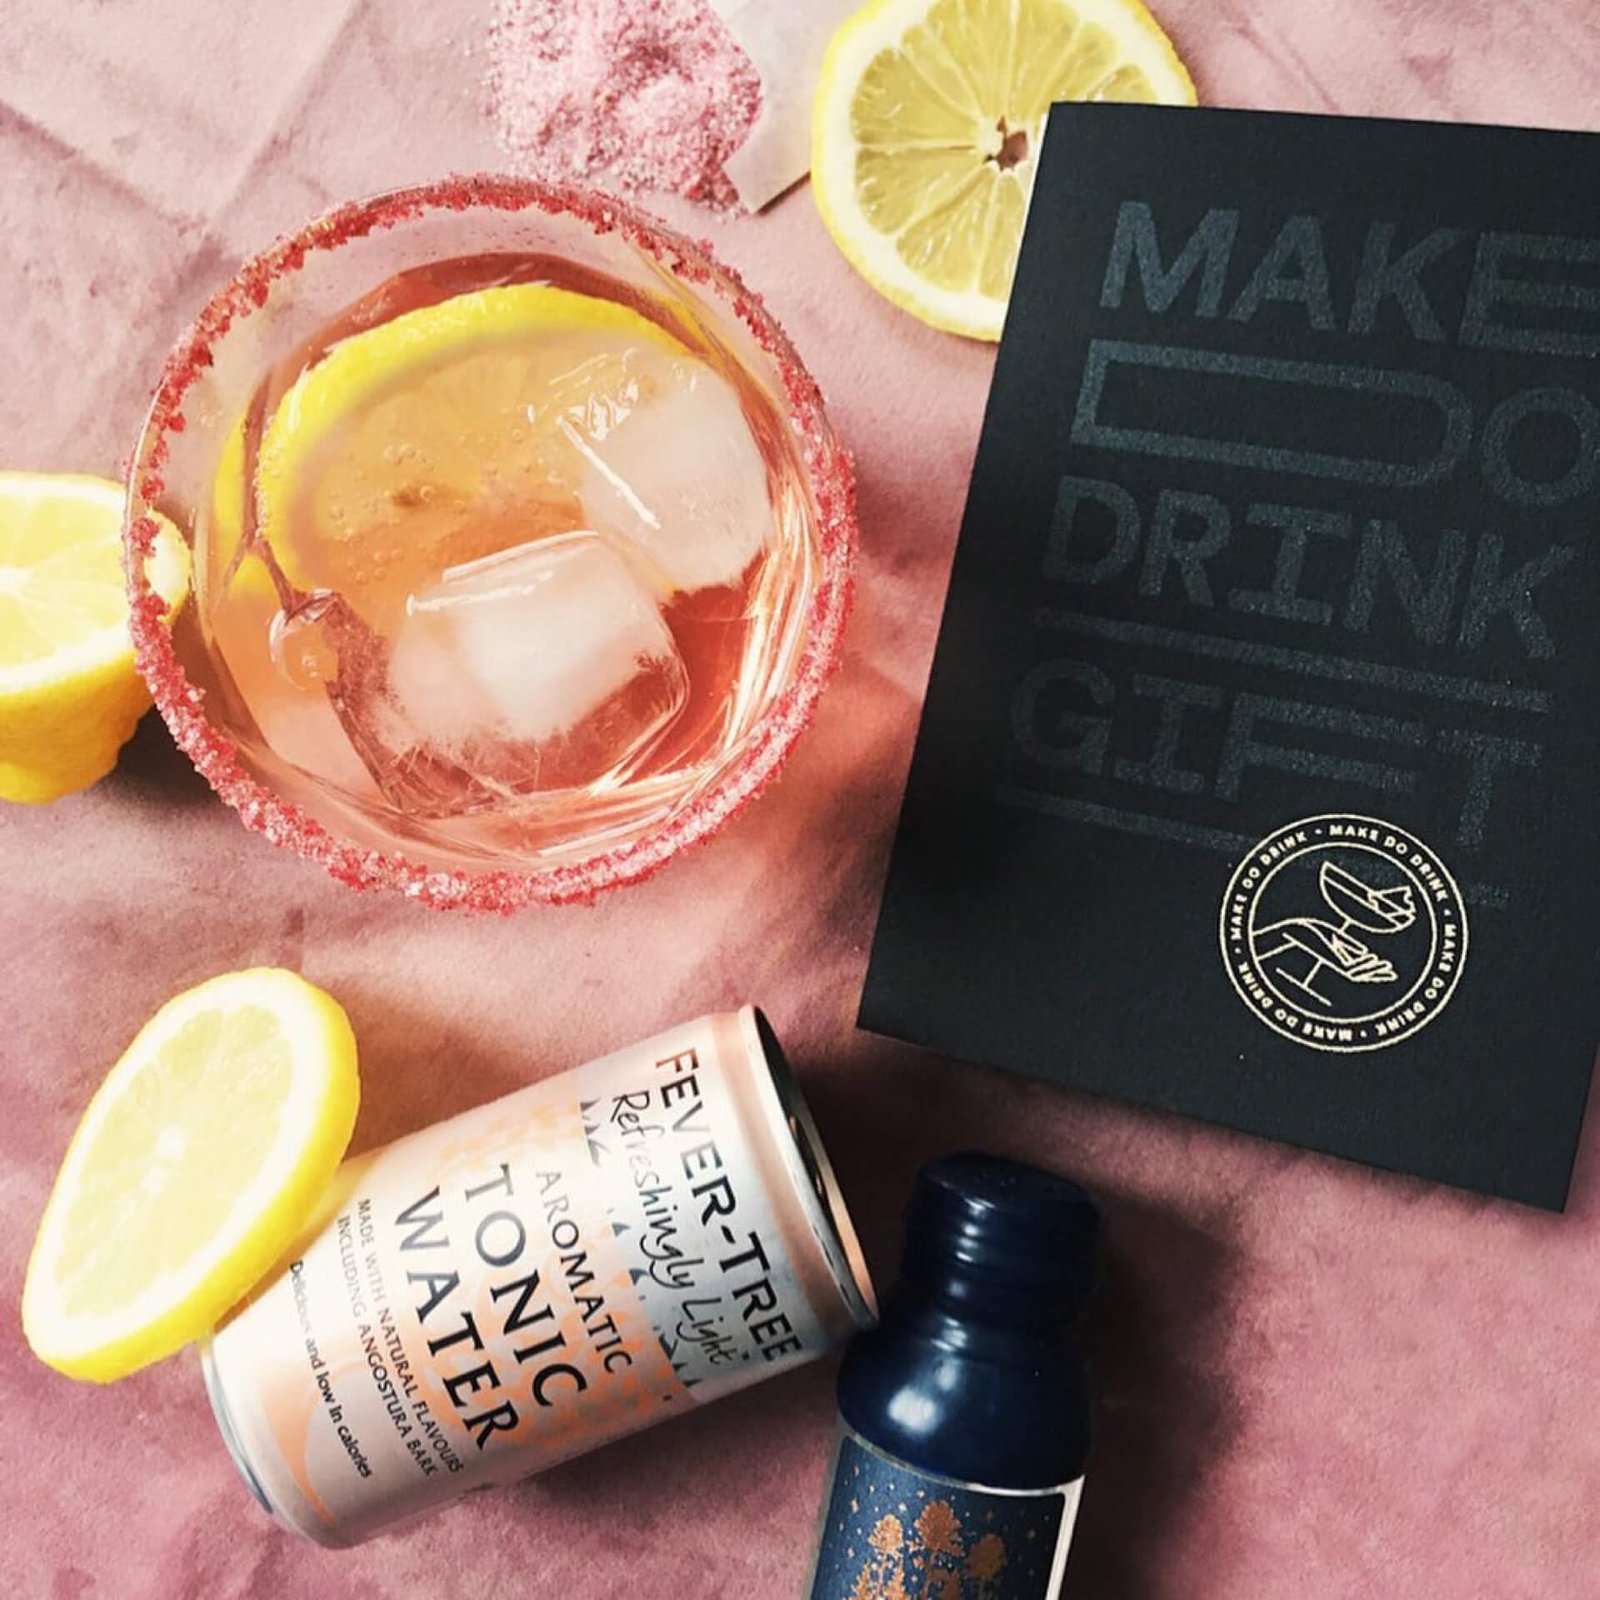 cocktail ingredients on a pink velvet background